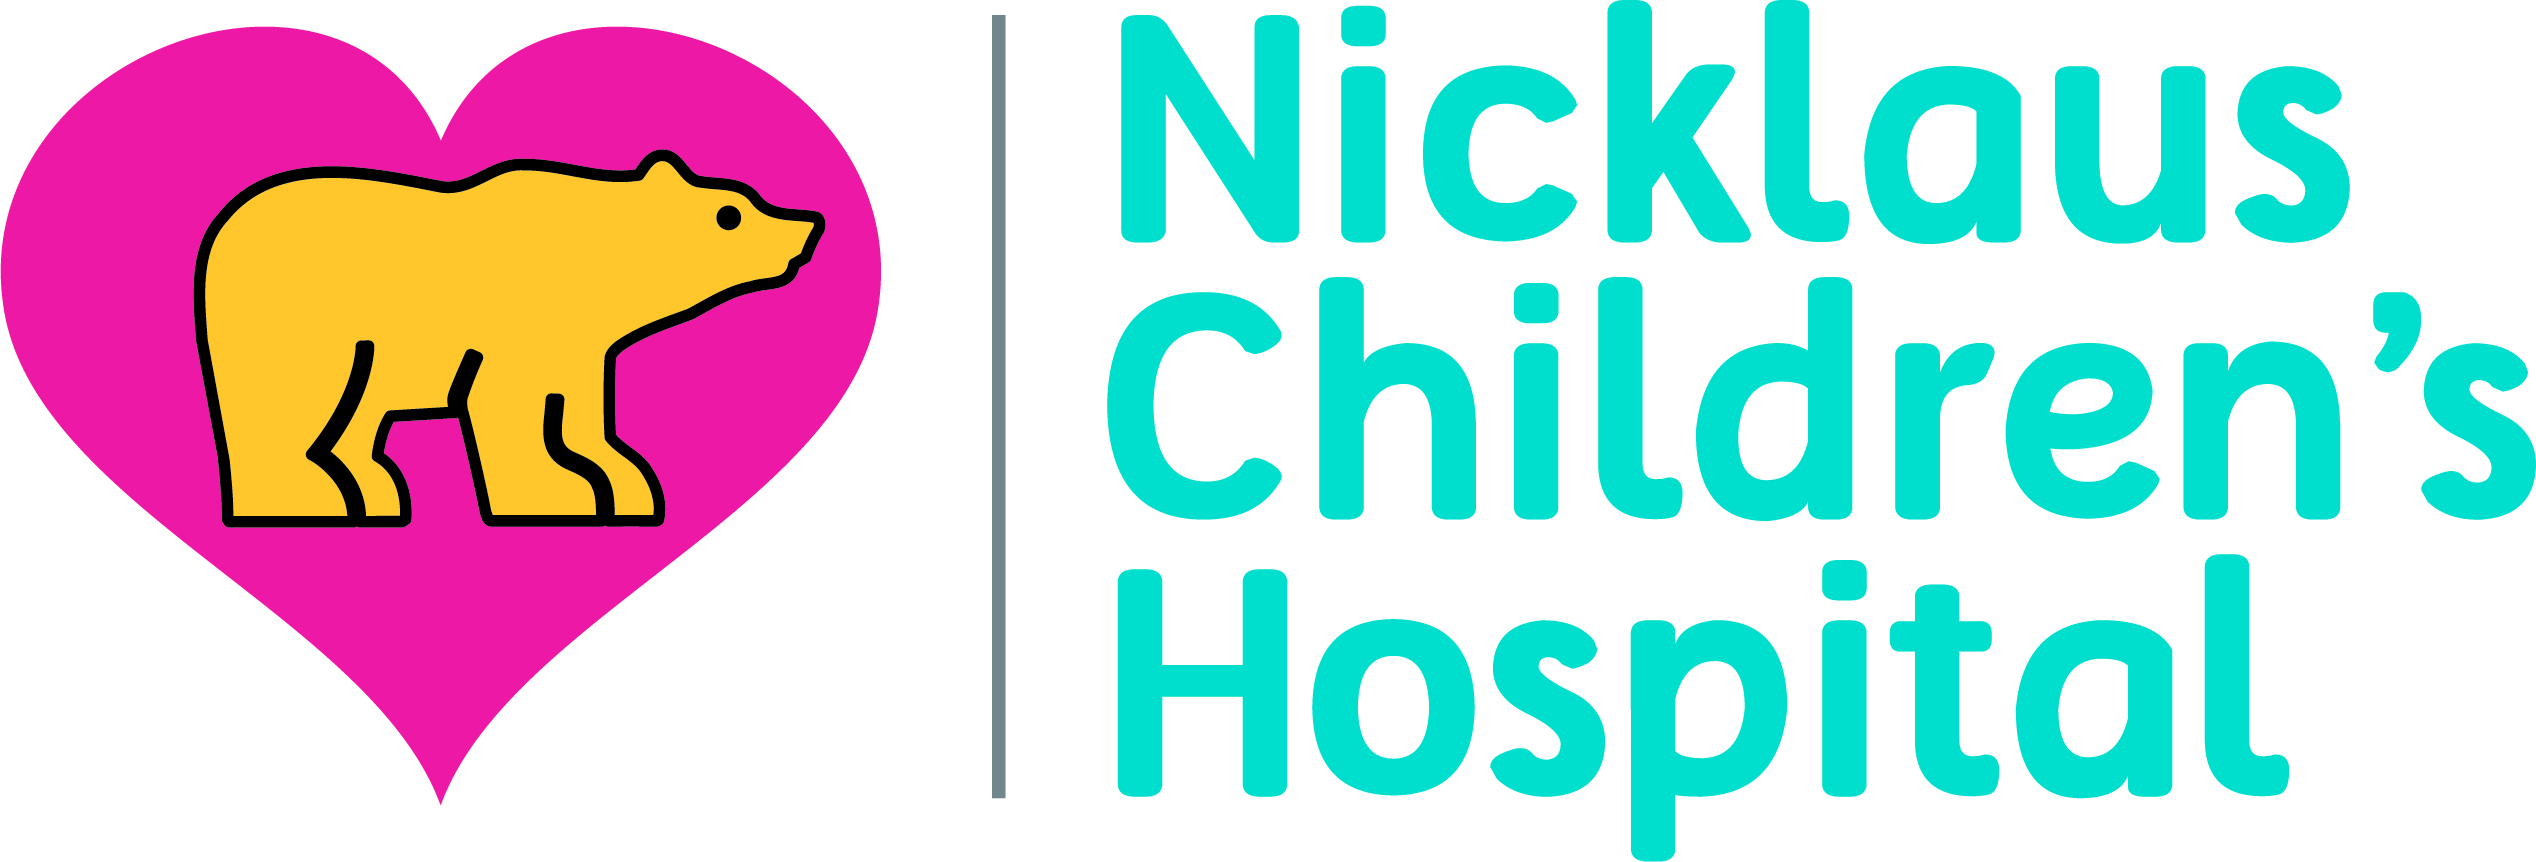 Nicklaus Children’s Hospital & Urgent Care Centers Are Open Miami Moms Blog 